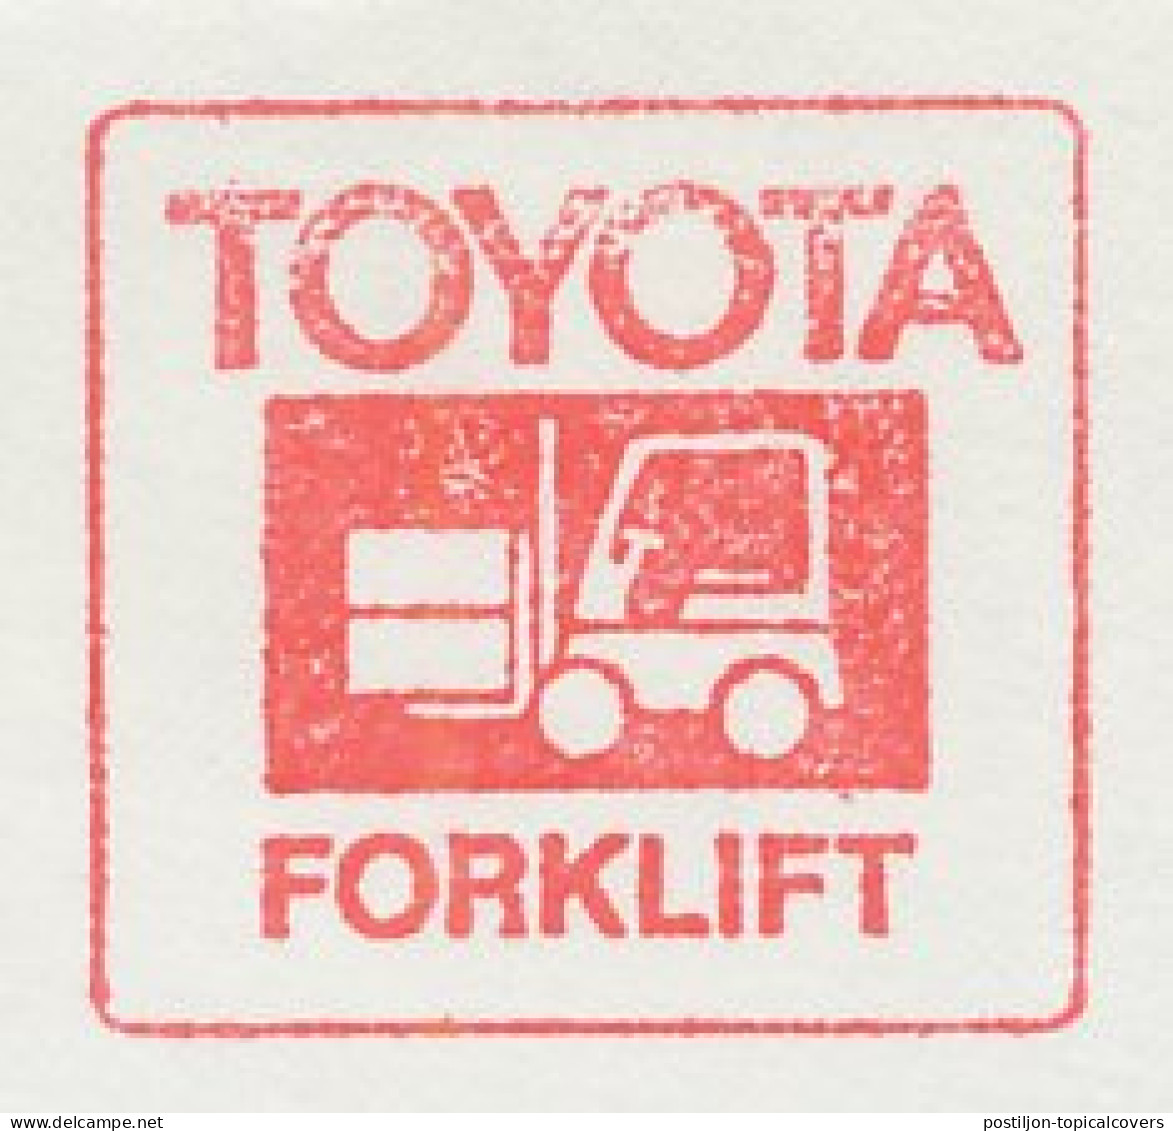 Meter Cut Belgium 1974 Forklift - Toyota - Other & Unclassified